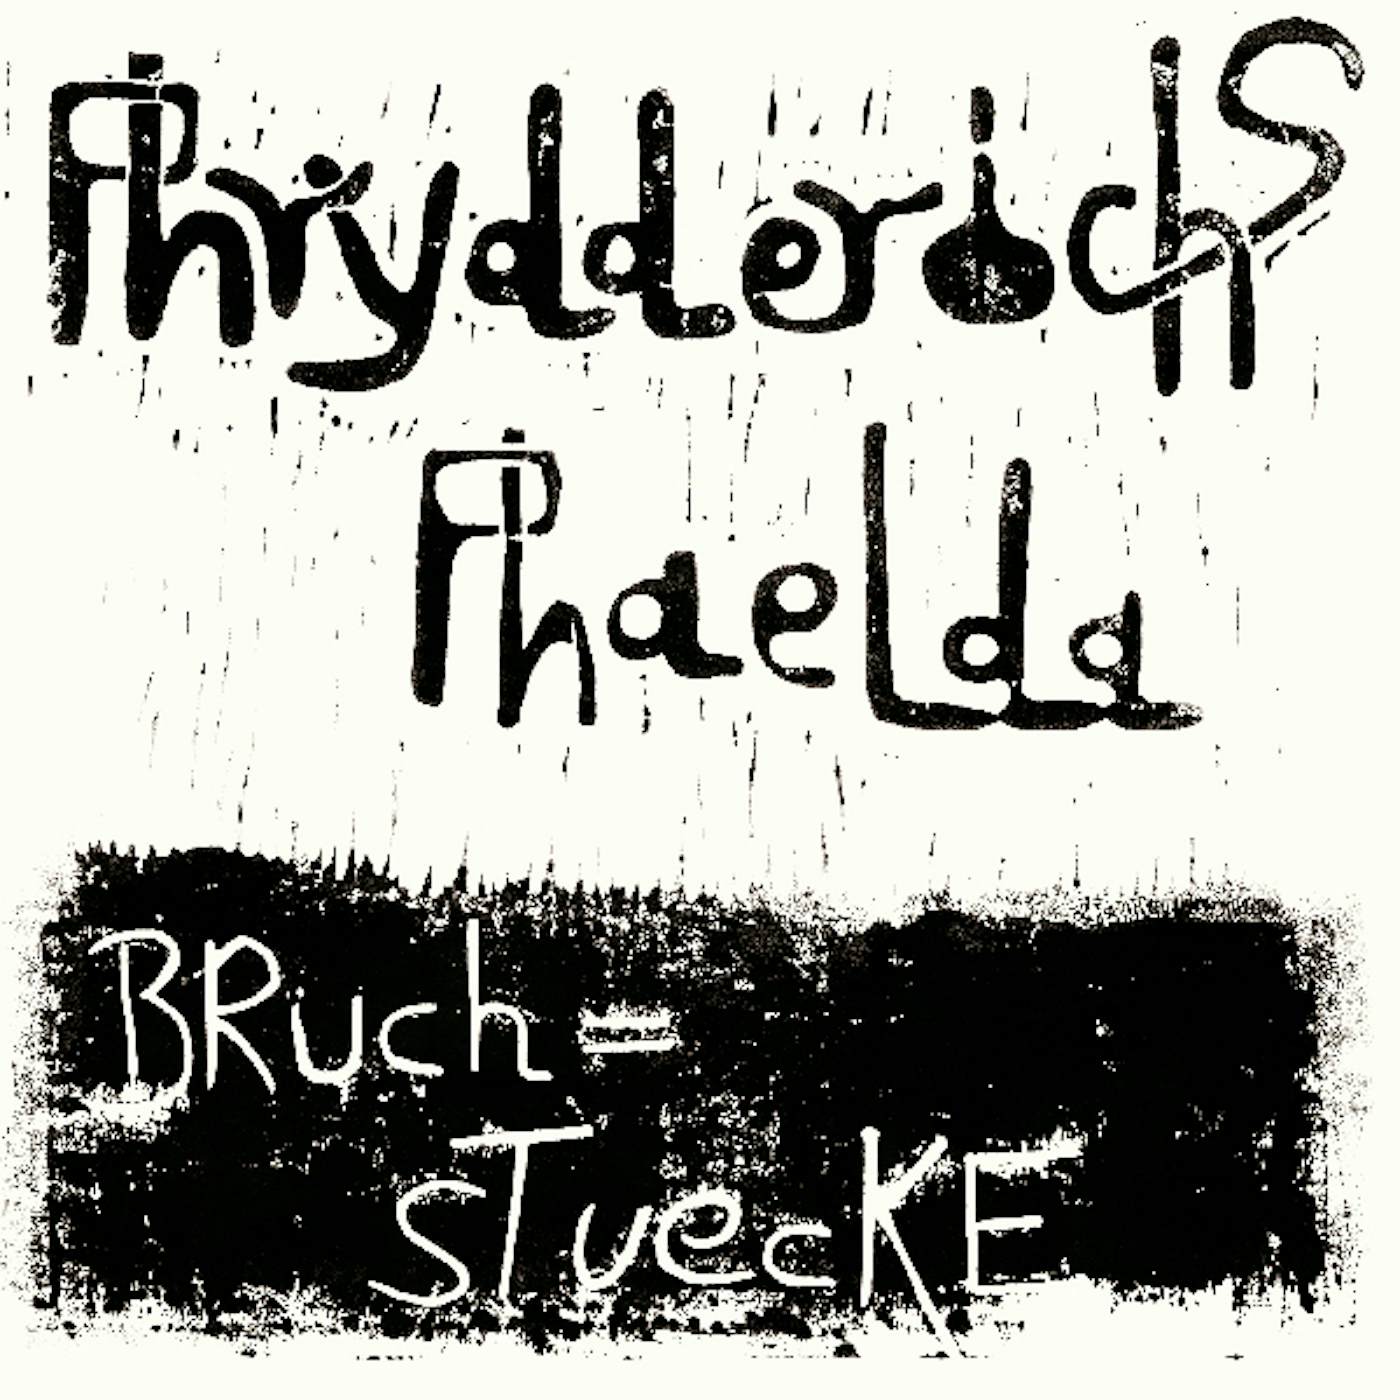 Phrydderichs Phaelda Bruchstuecke Vinyl Record